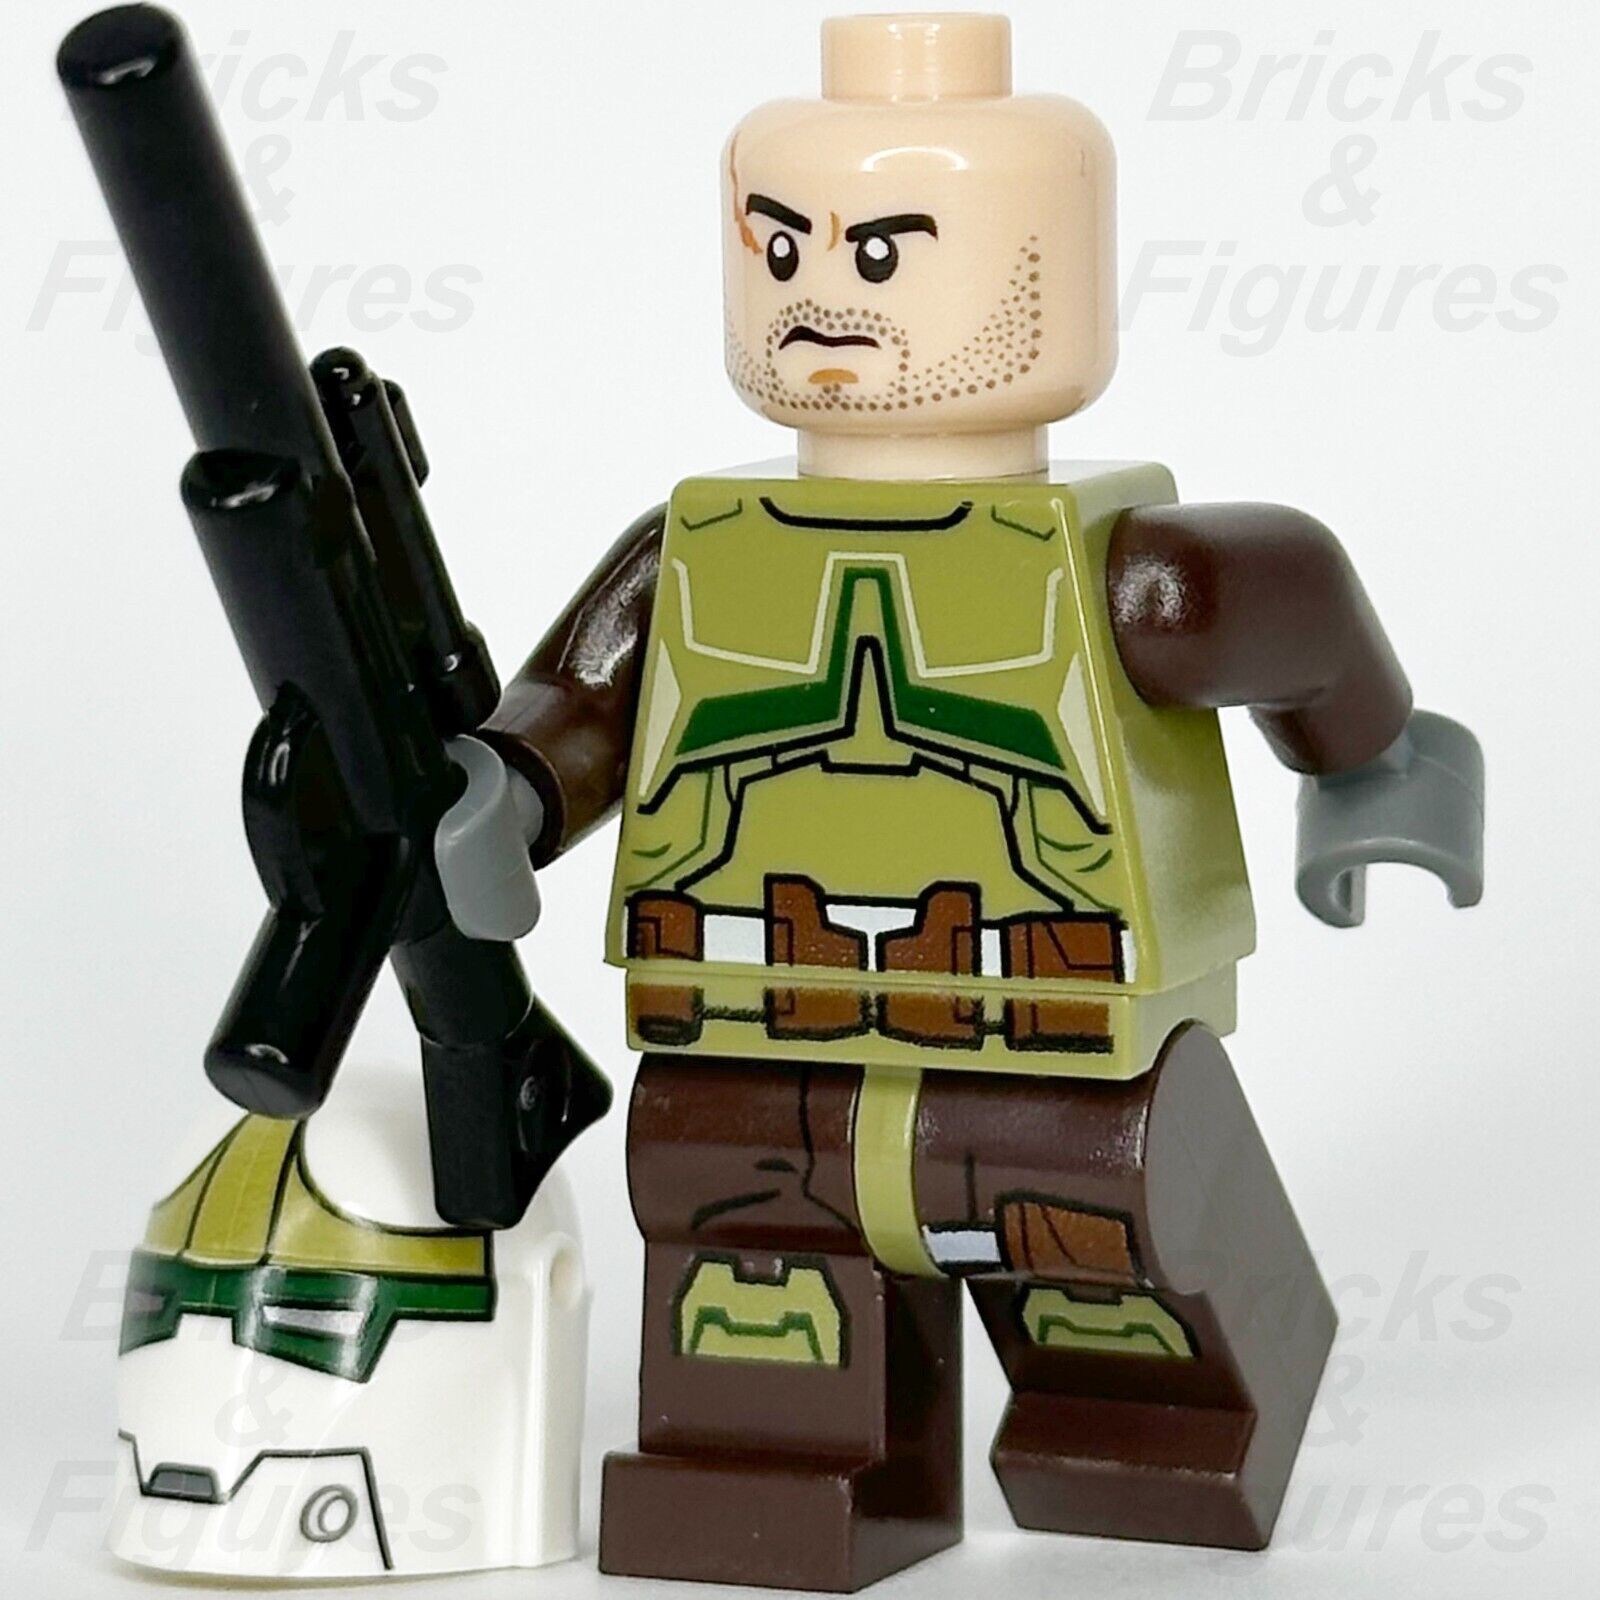 LEGO Star Wars Bounty Hunter Minifigure Yoda Chronicles 75018 sw0476 Minifig